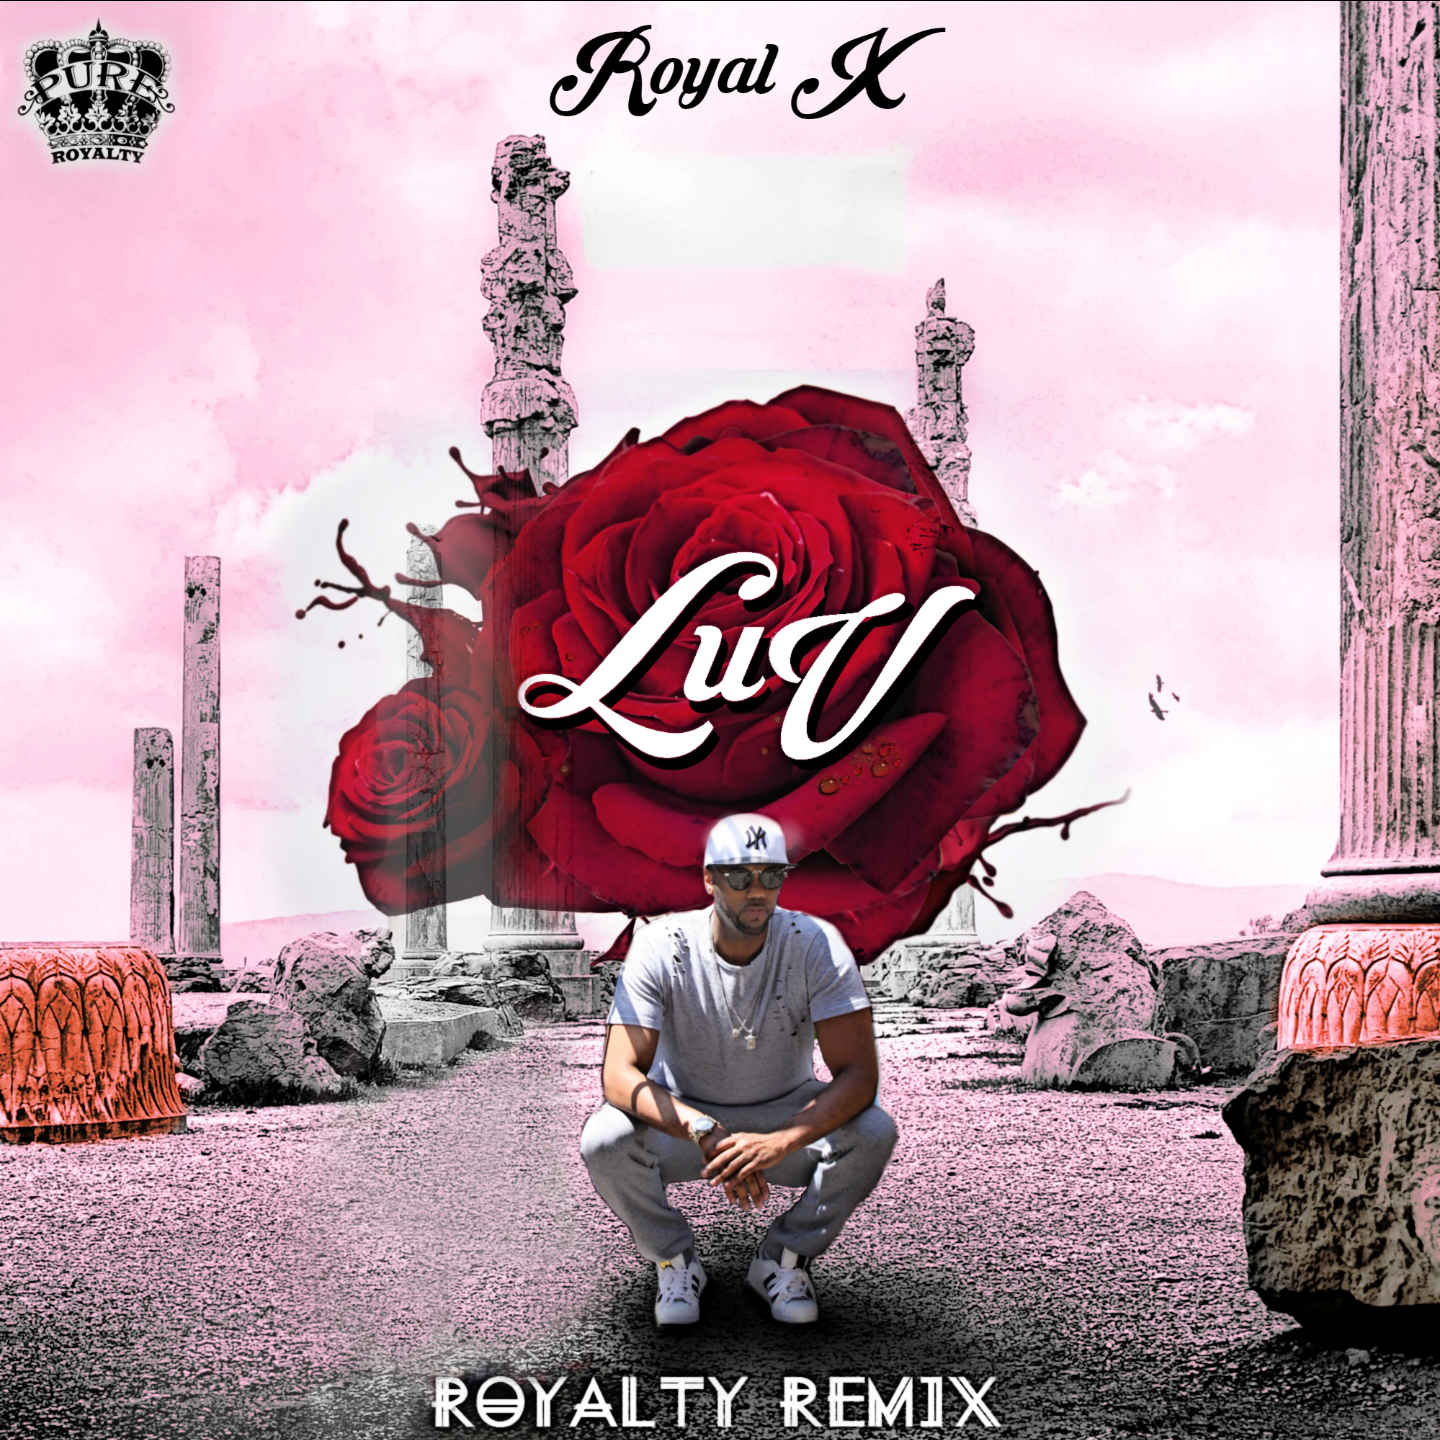 Royalty remix